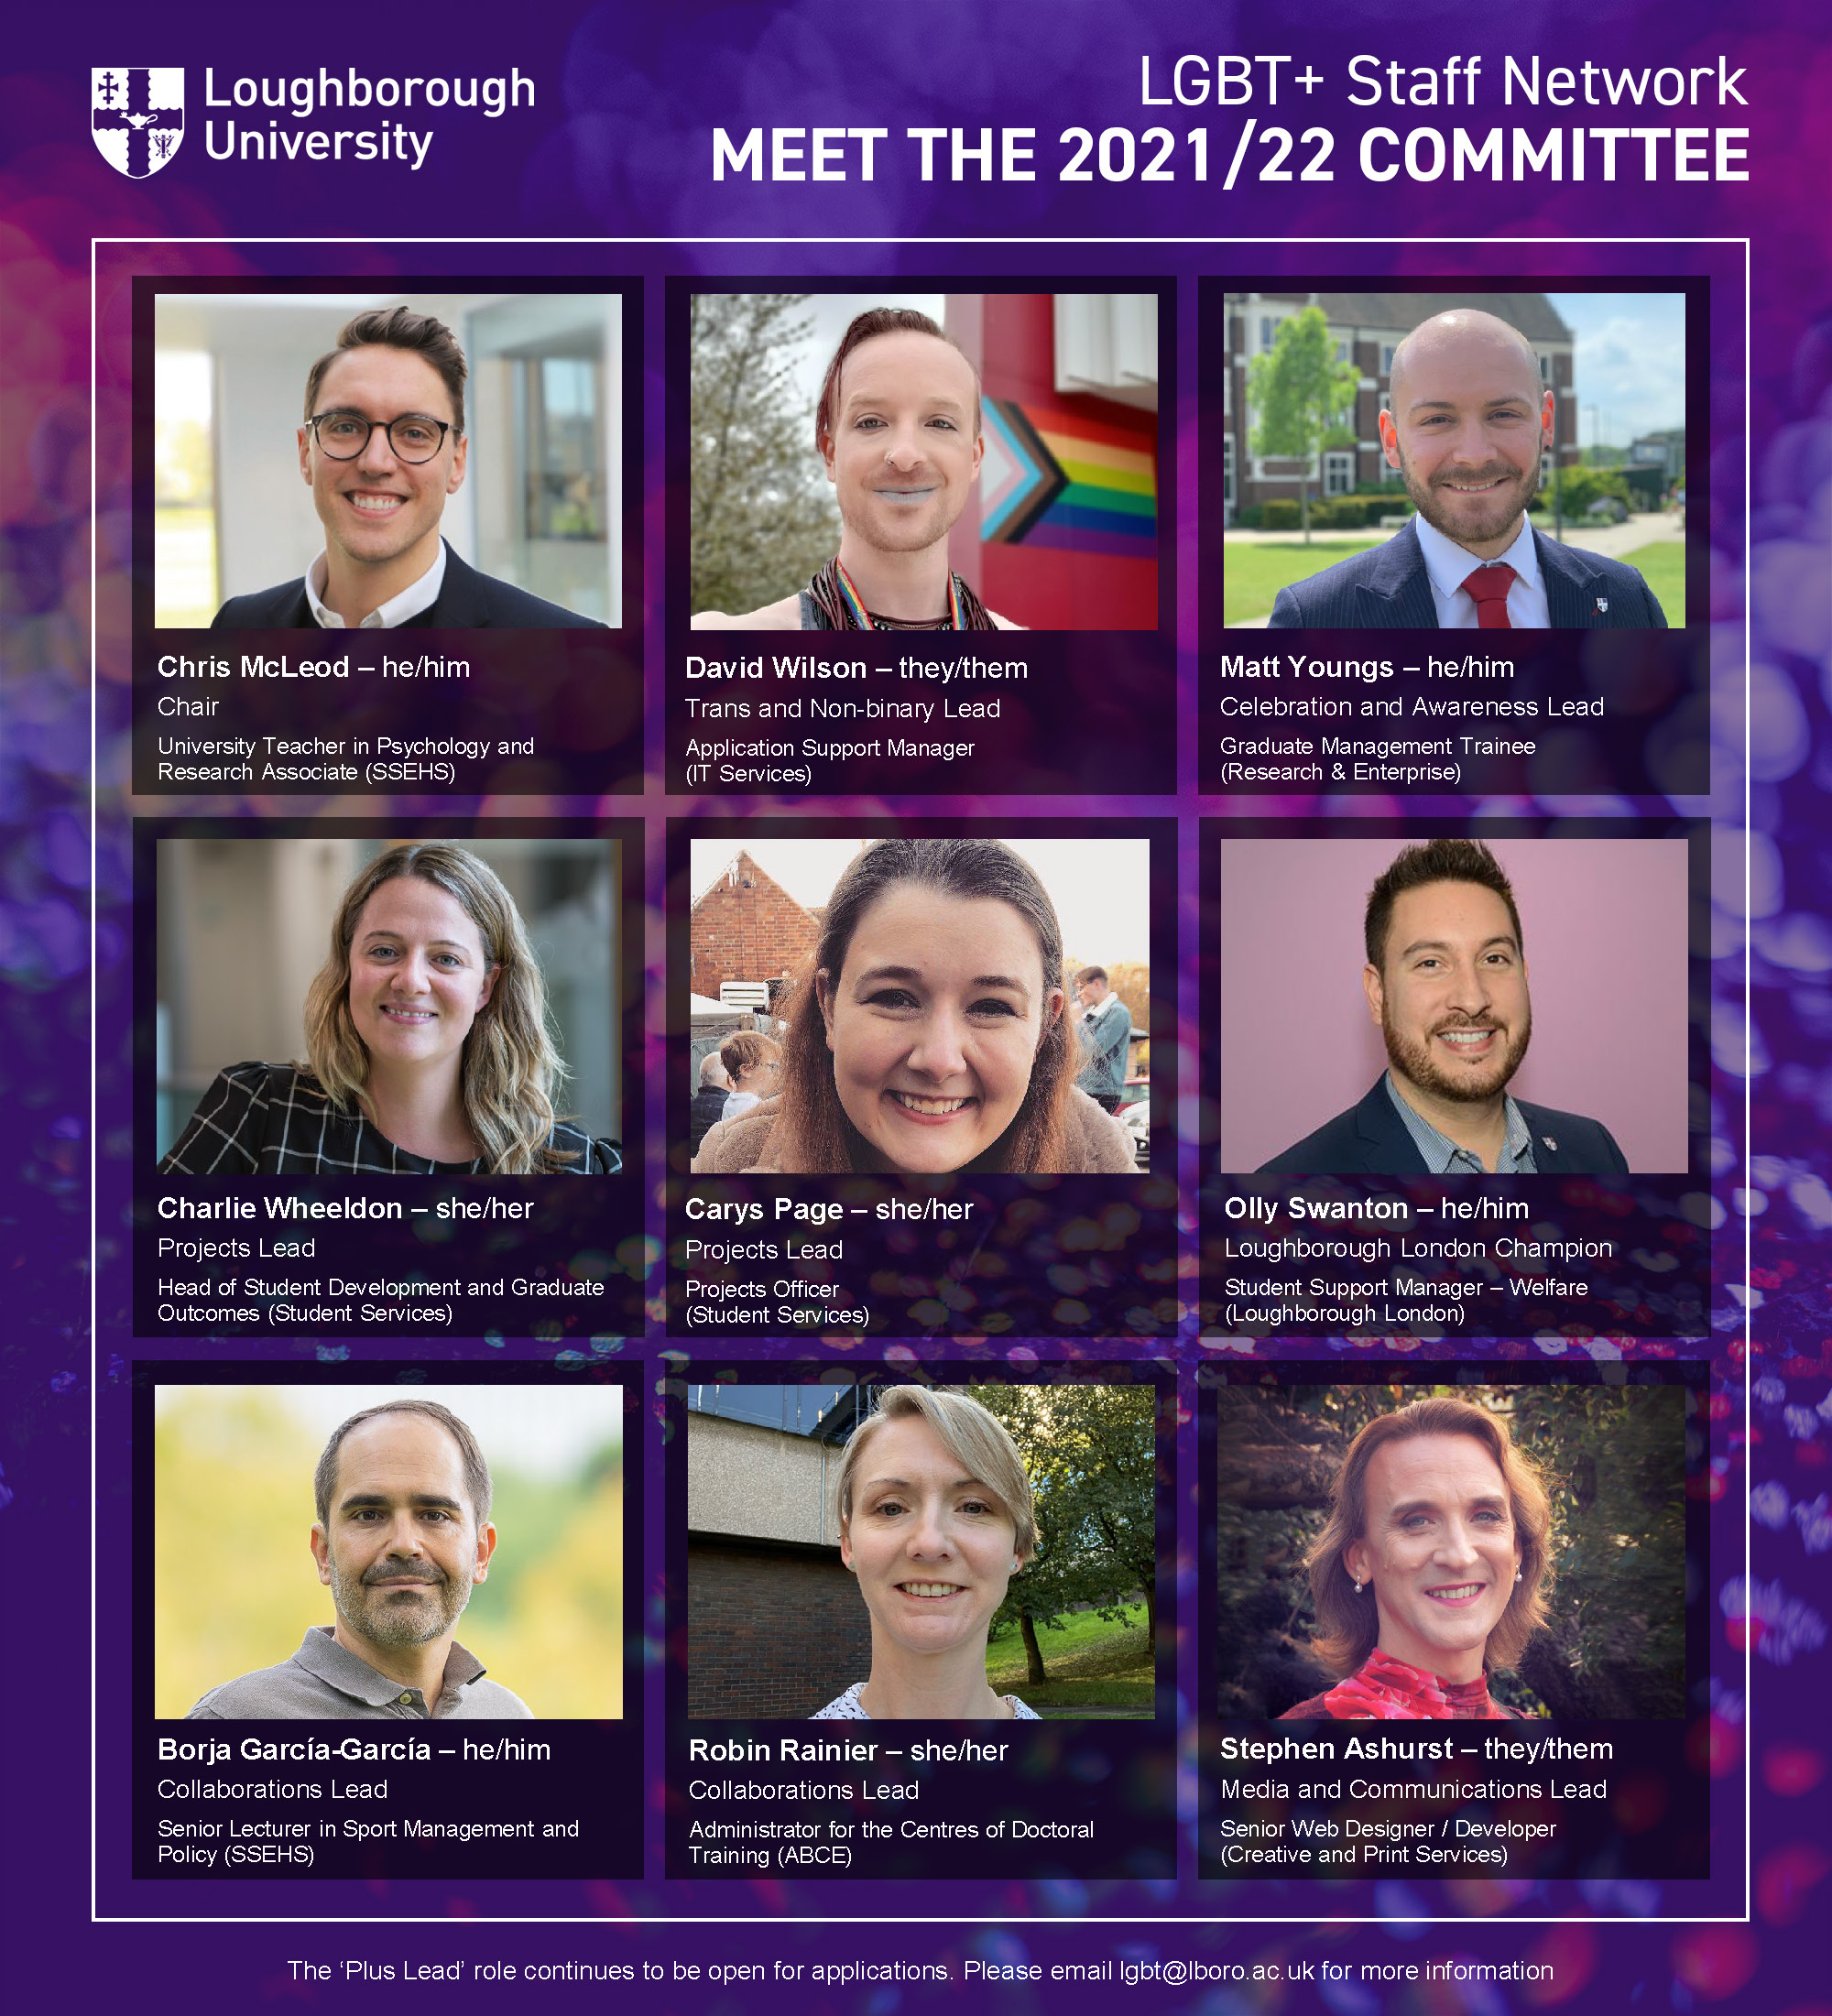 2021/22 LGBT+ Committee